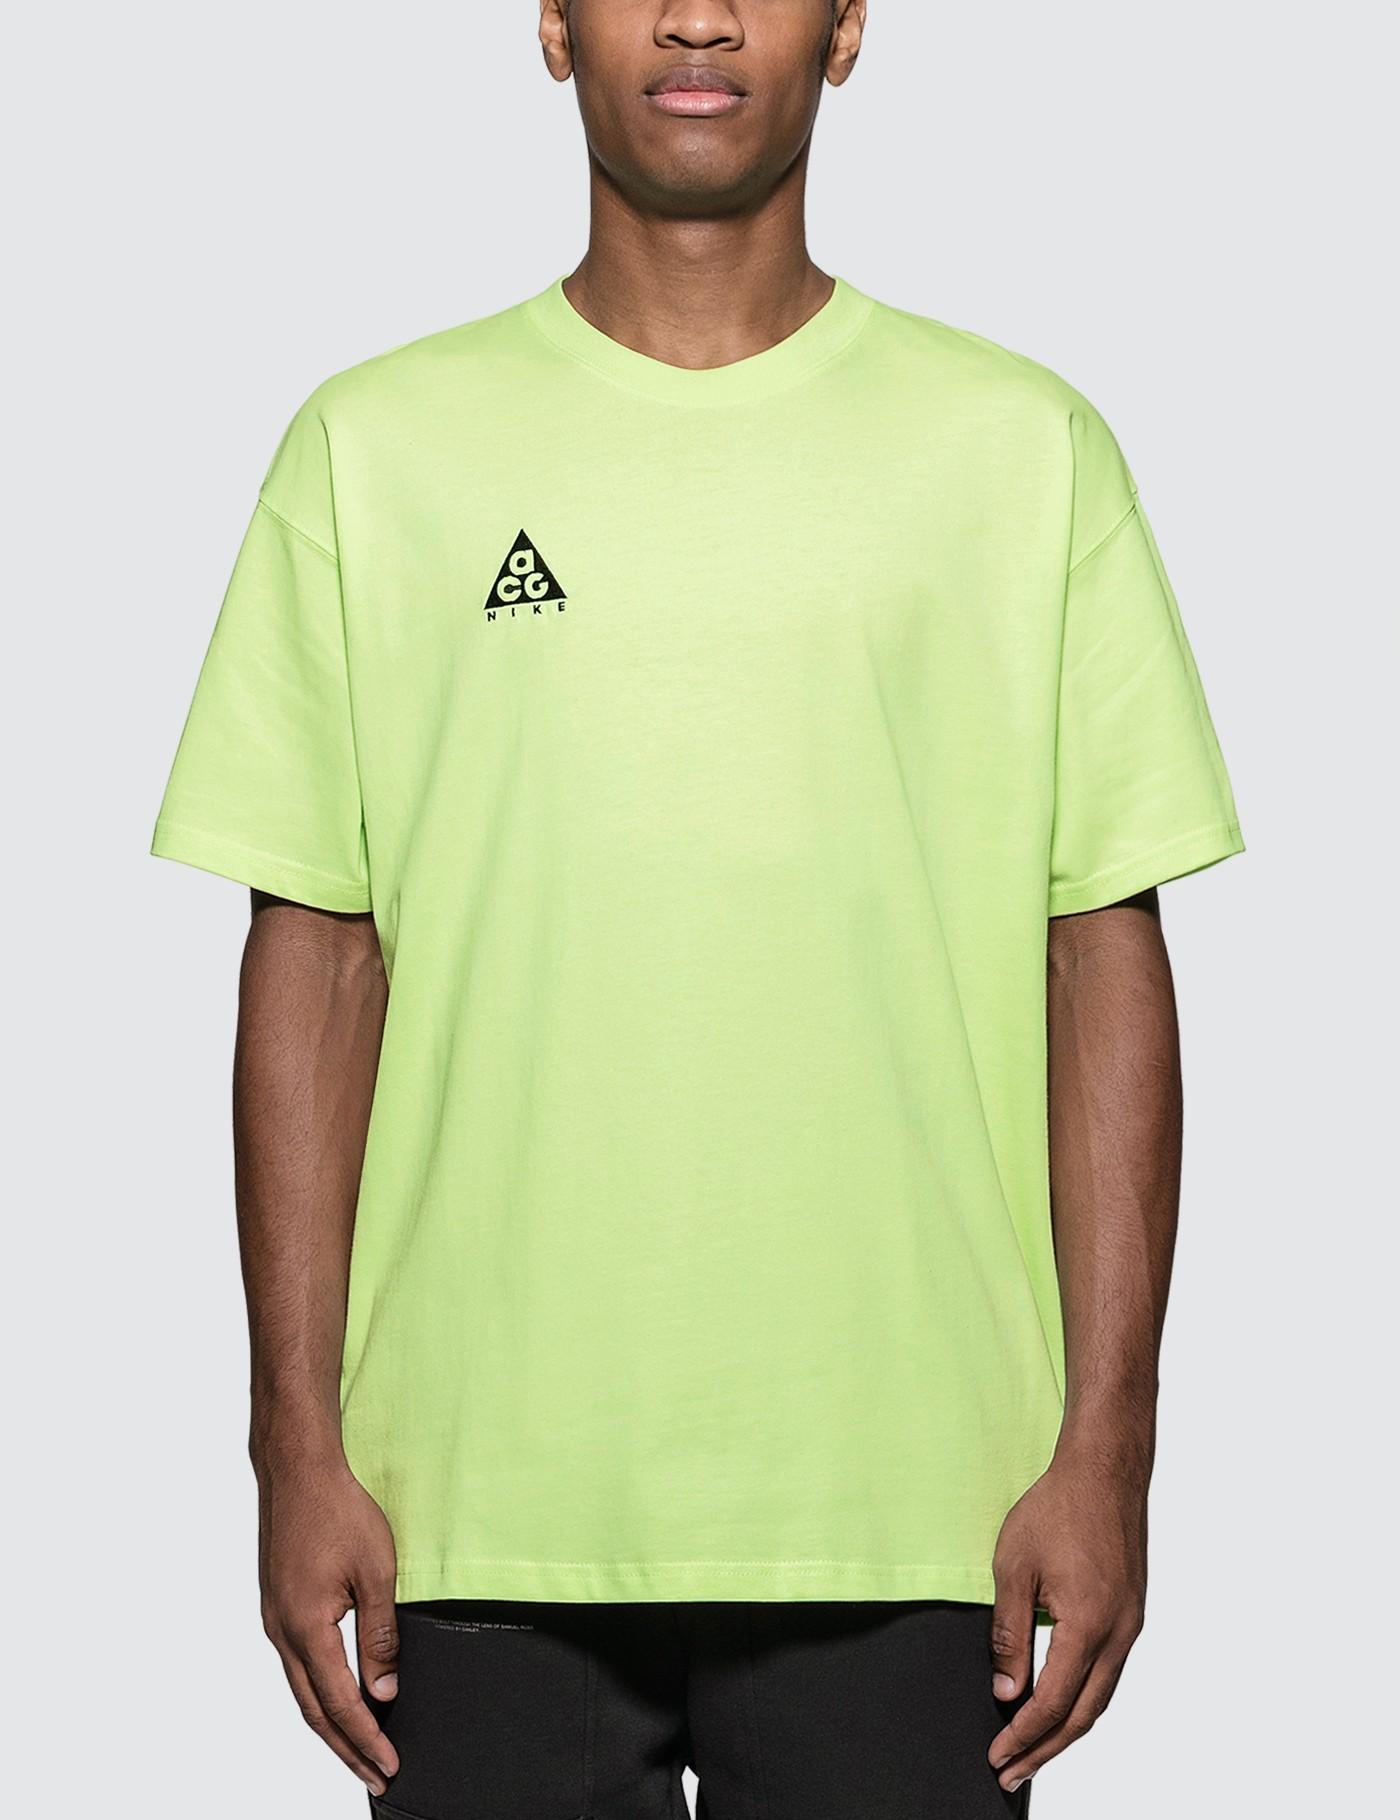 Nike Acg Short Sleeve T-shirt in Yellow 